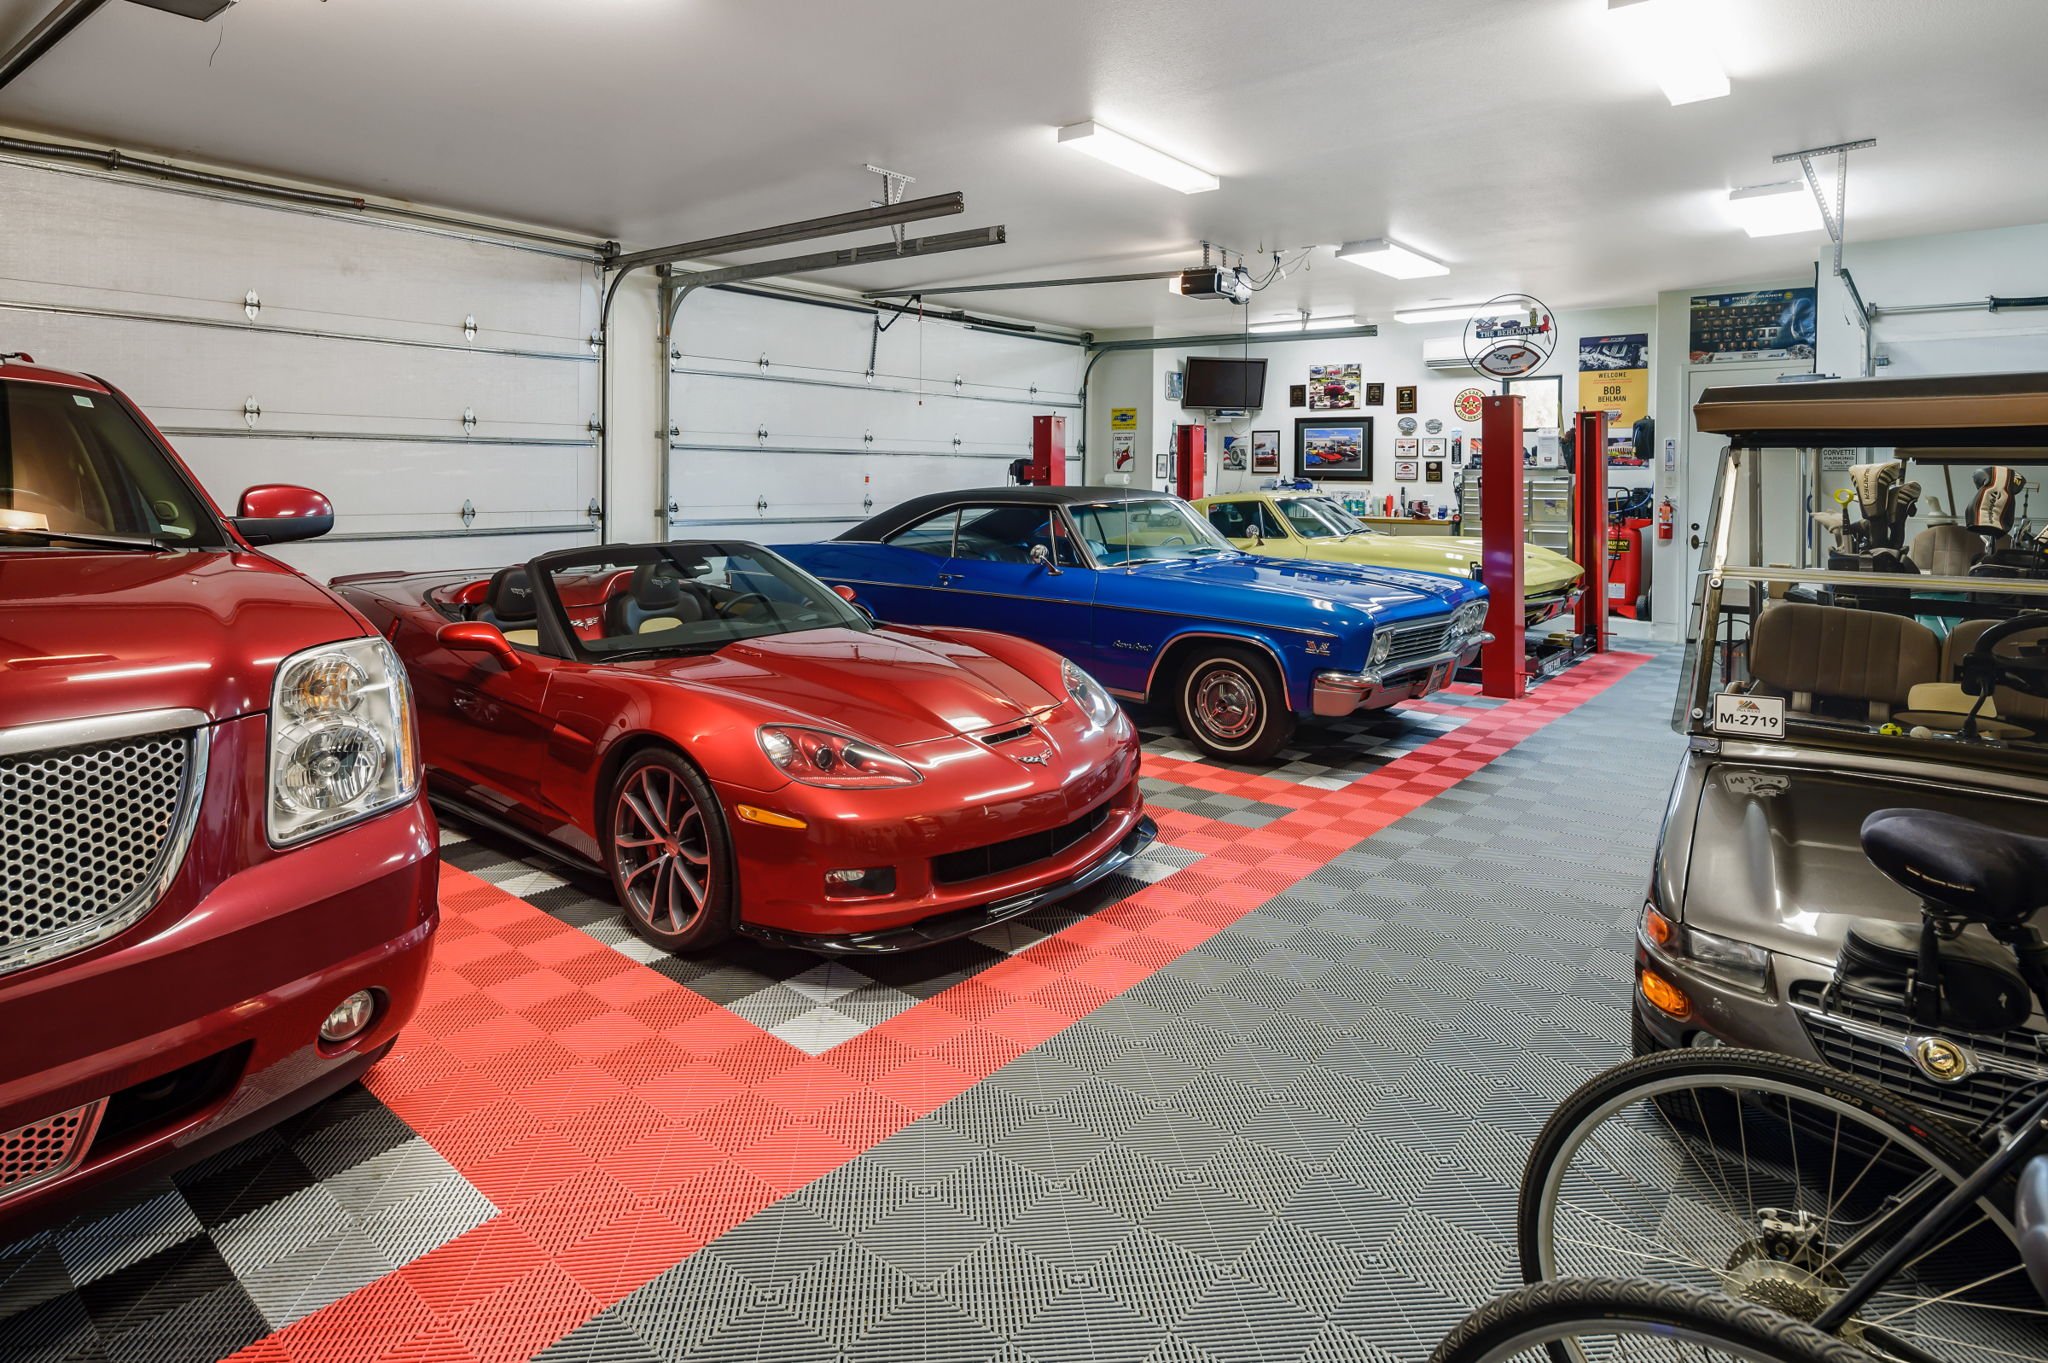 4+ Car Garage